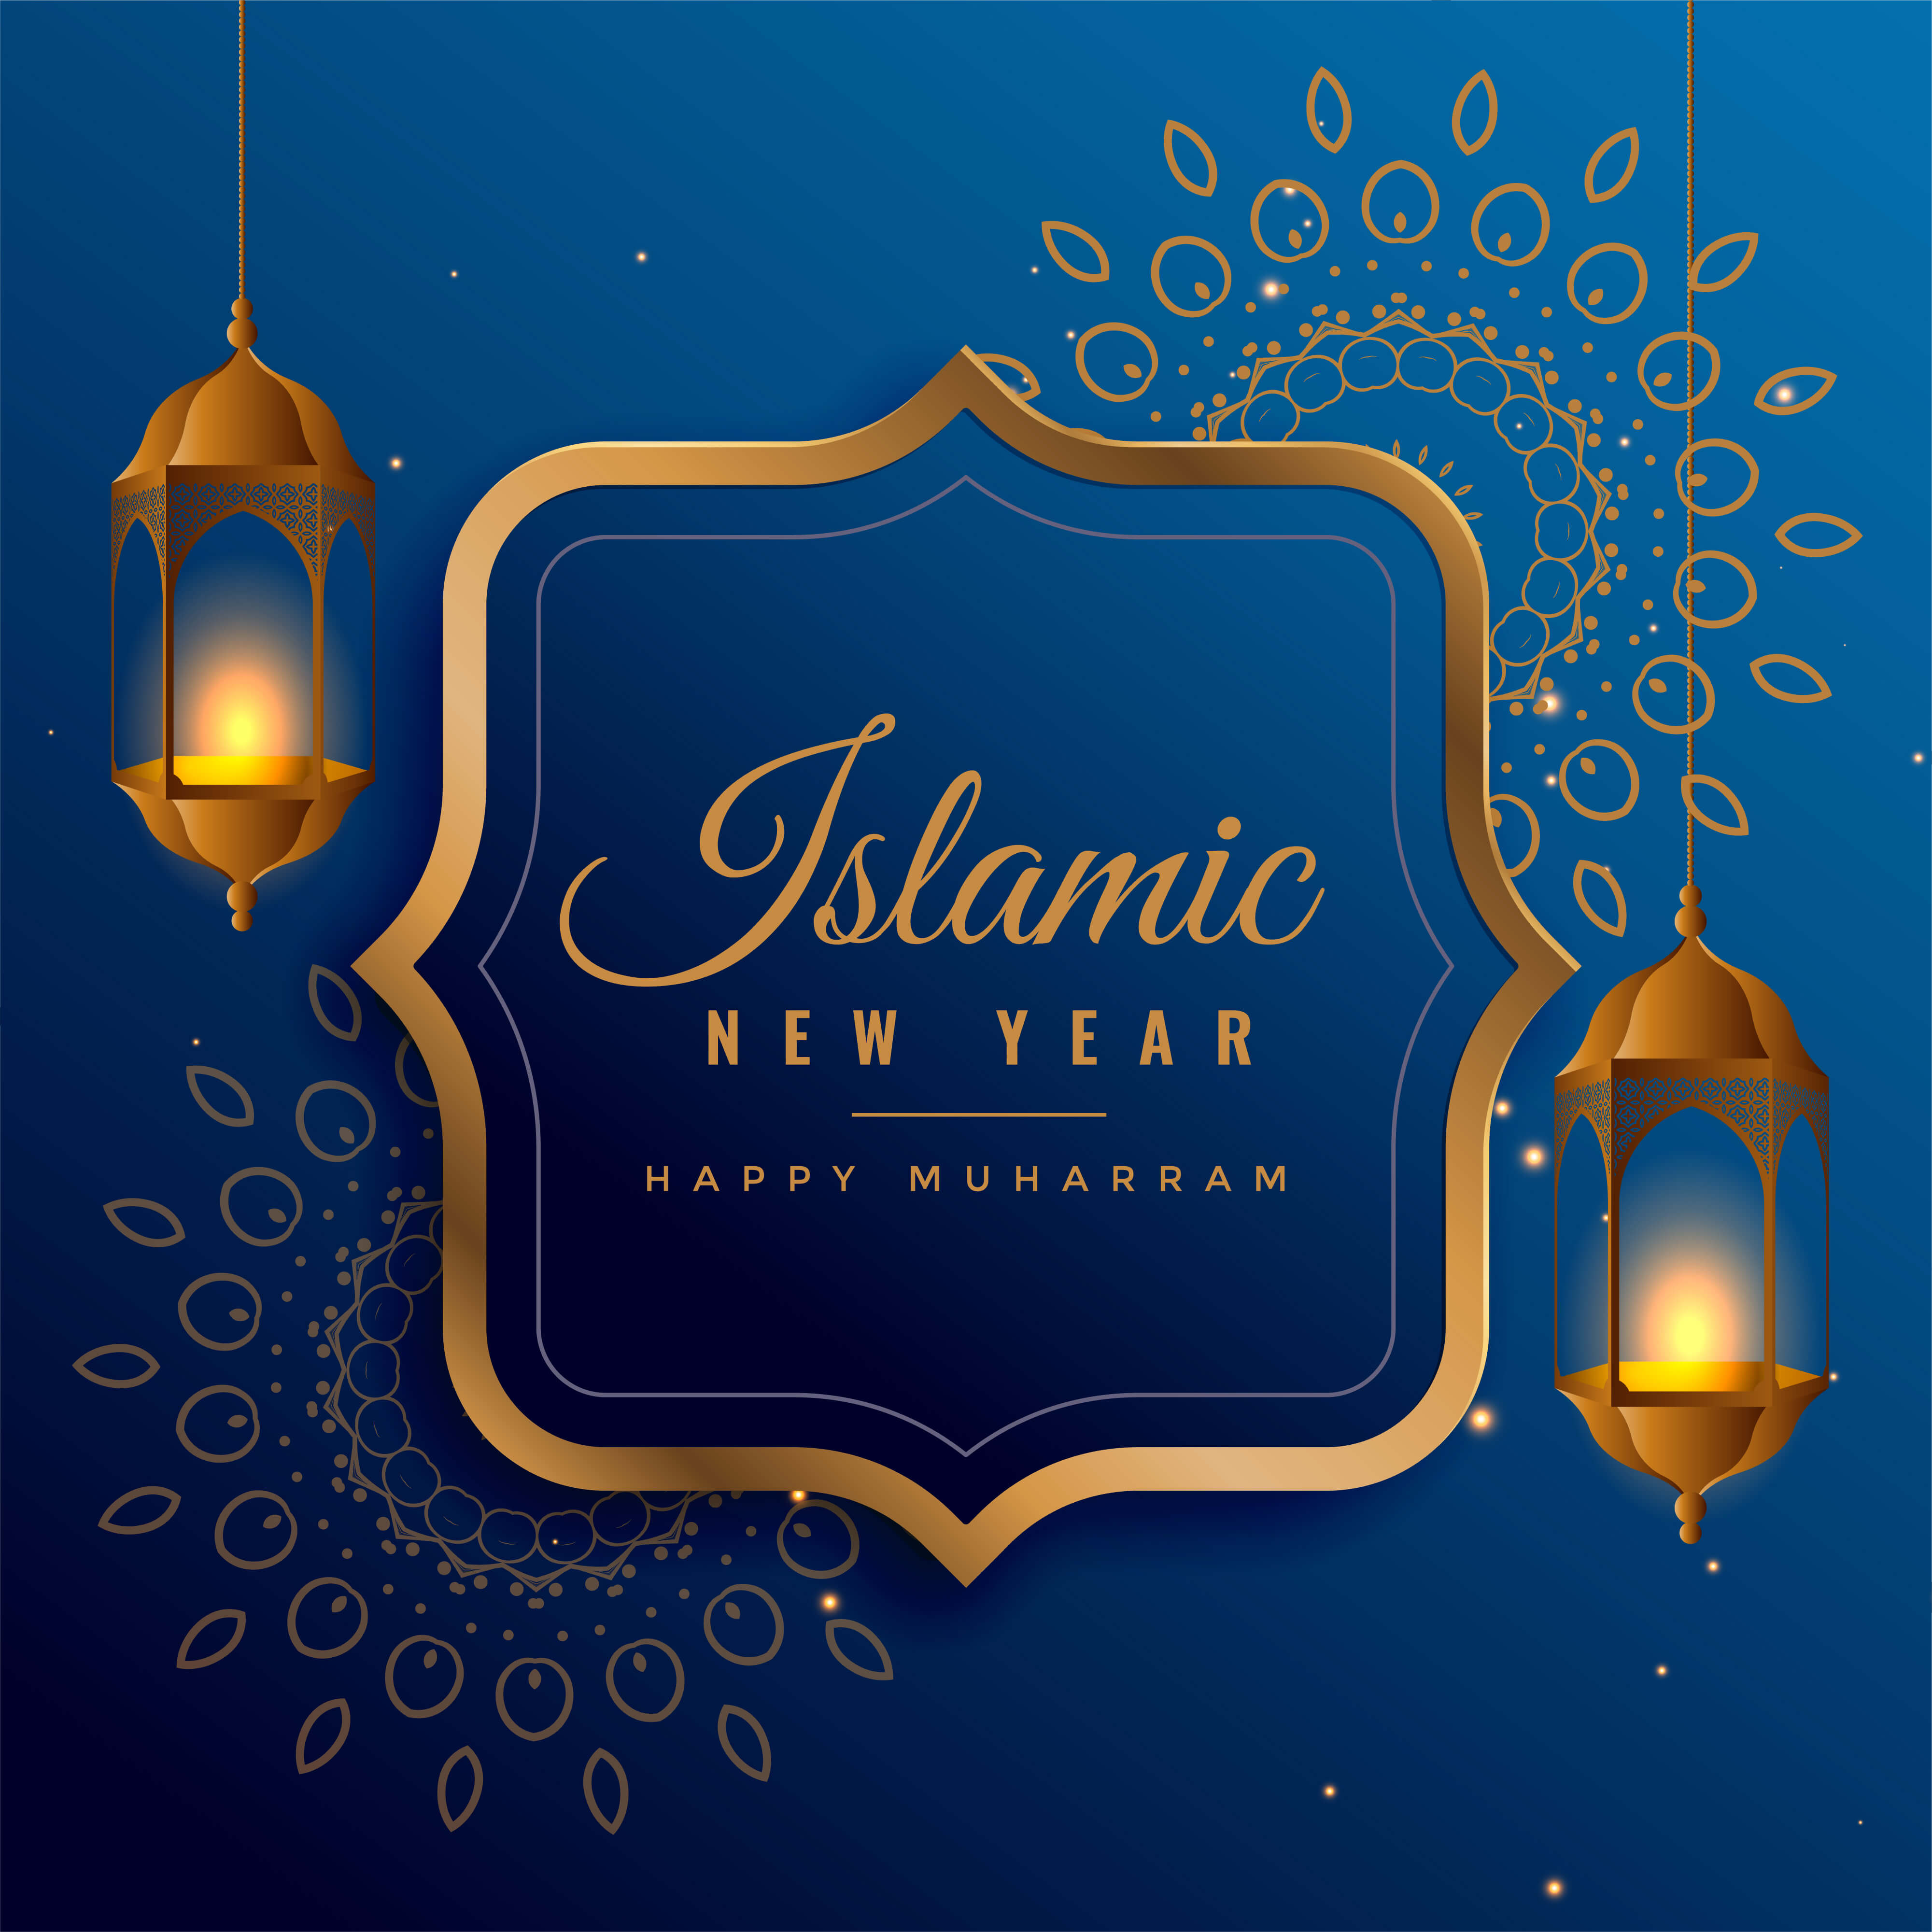 Creative Islamic New Year Design With Hanging Lanterns - Islamic New Year 2019 - HD Wallpaper 